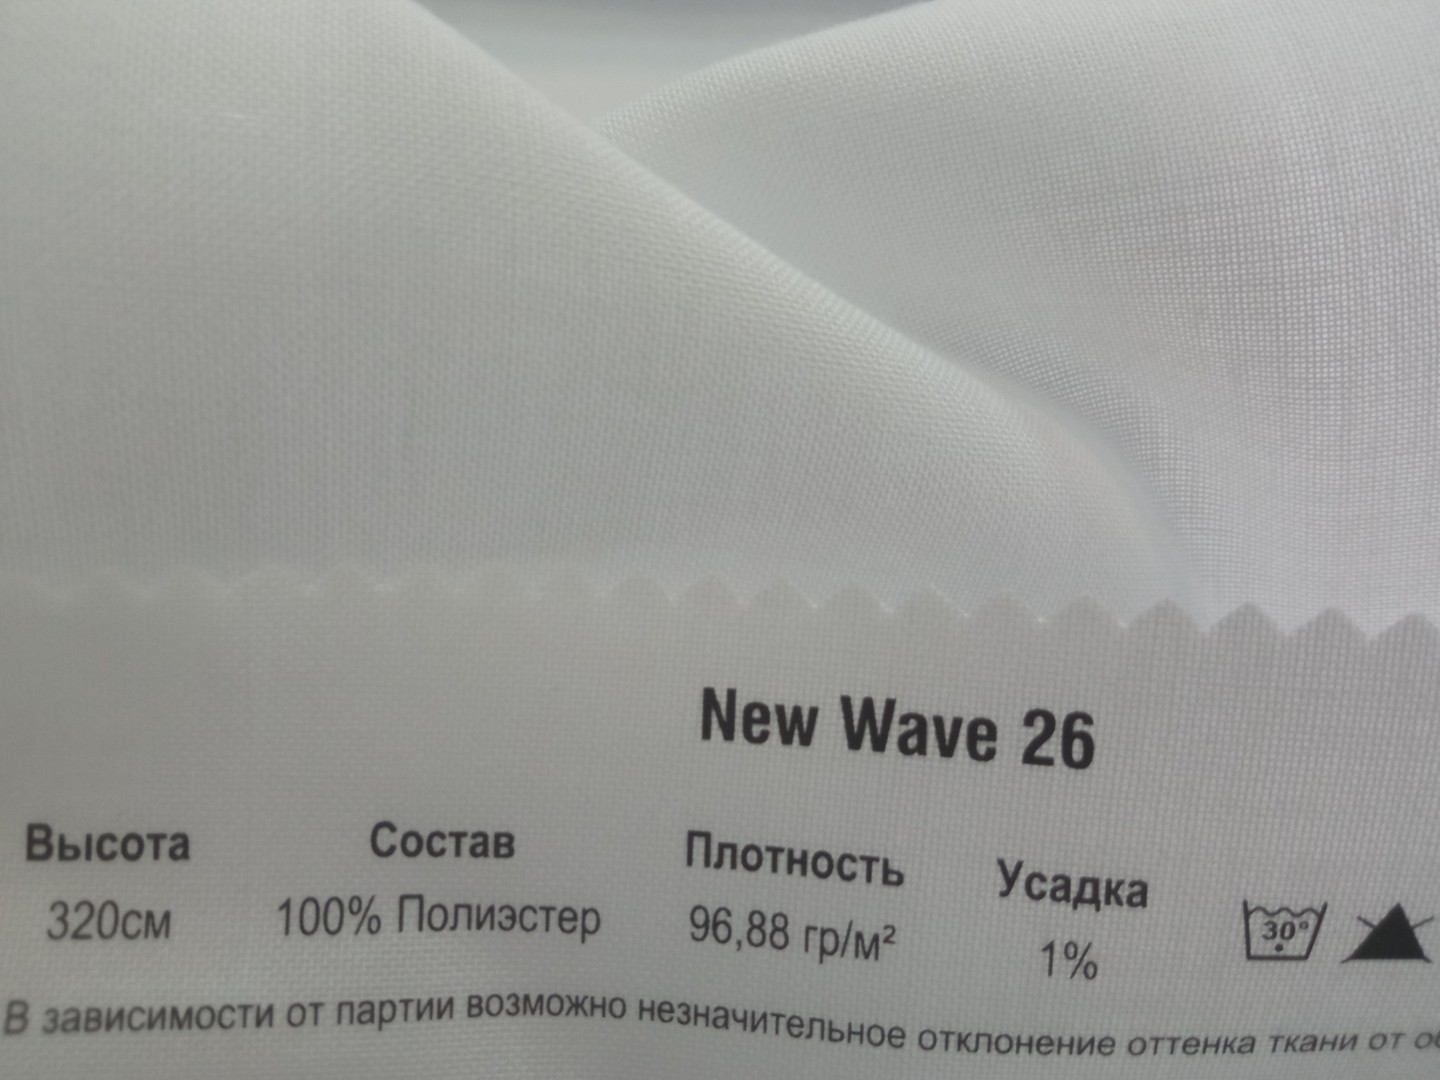 Wave17. Ткань 5 Авеню New Wave 13. Ткань Waves 26. New Wave 05 collection ткани. 5 Авеню ткани New Wave каталог.